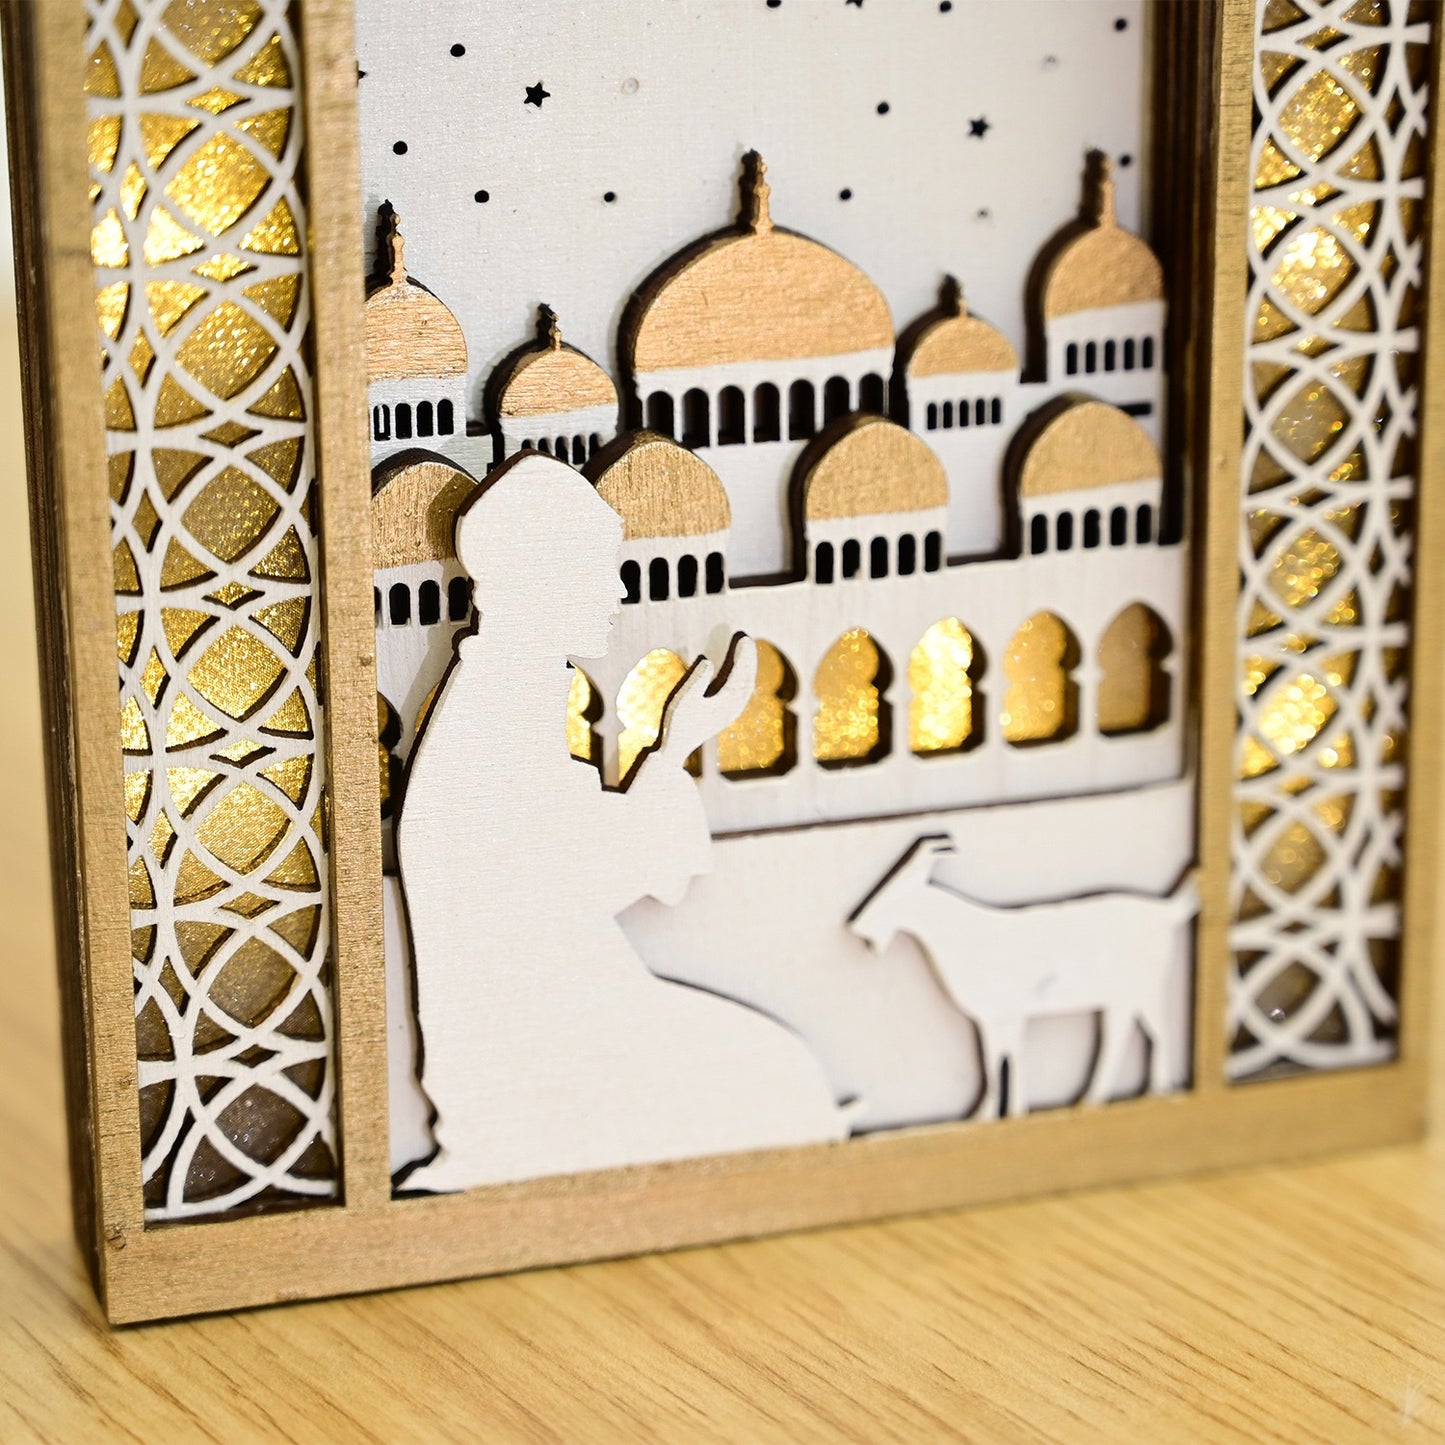 New Arrivals -  Wooden Decorative Light Table Centerpiece